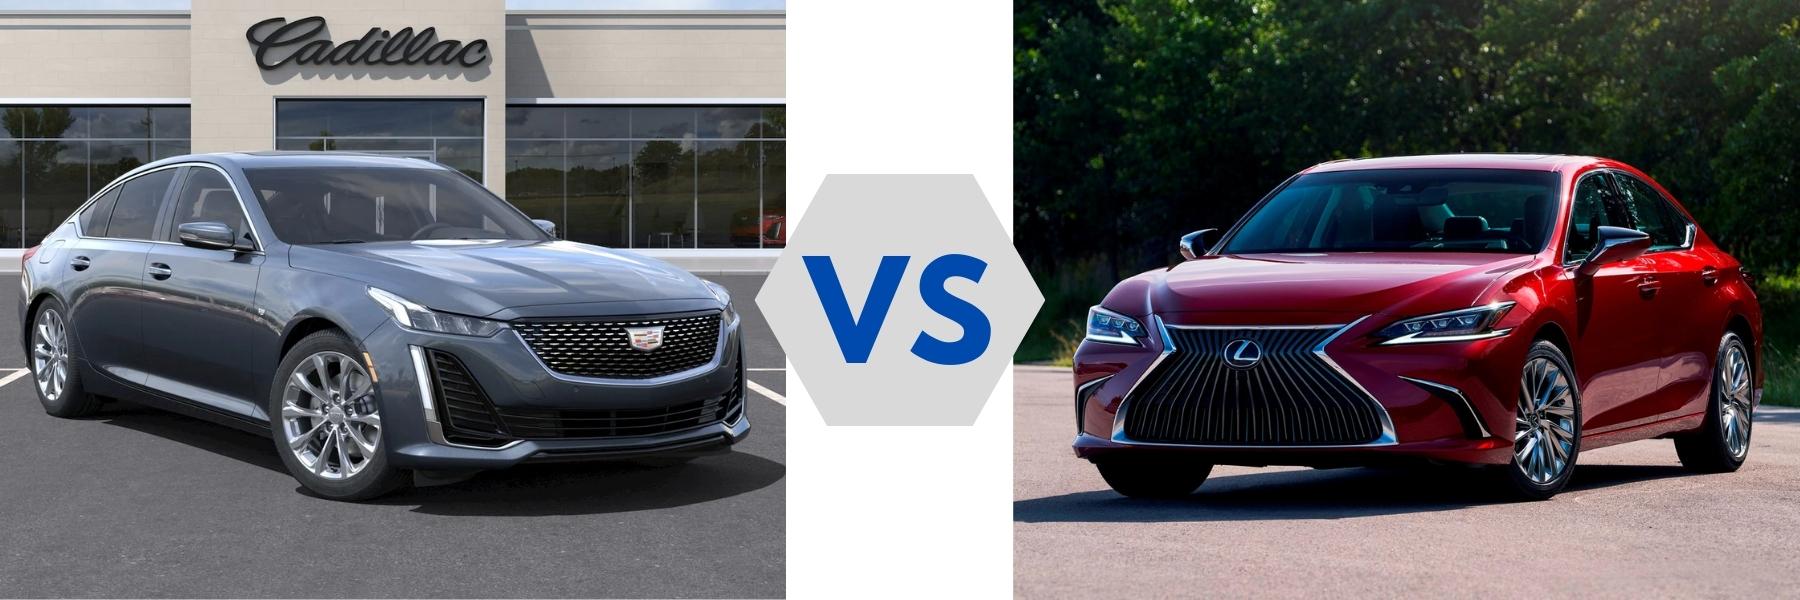 2022 Cadillac CT5 vs Lexus ES 350